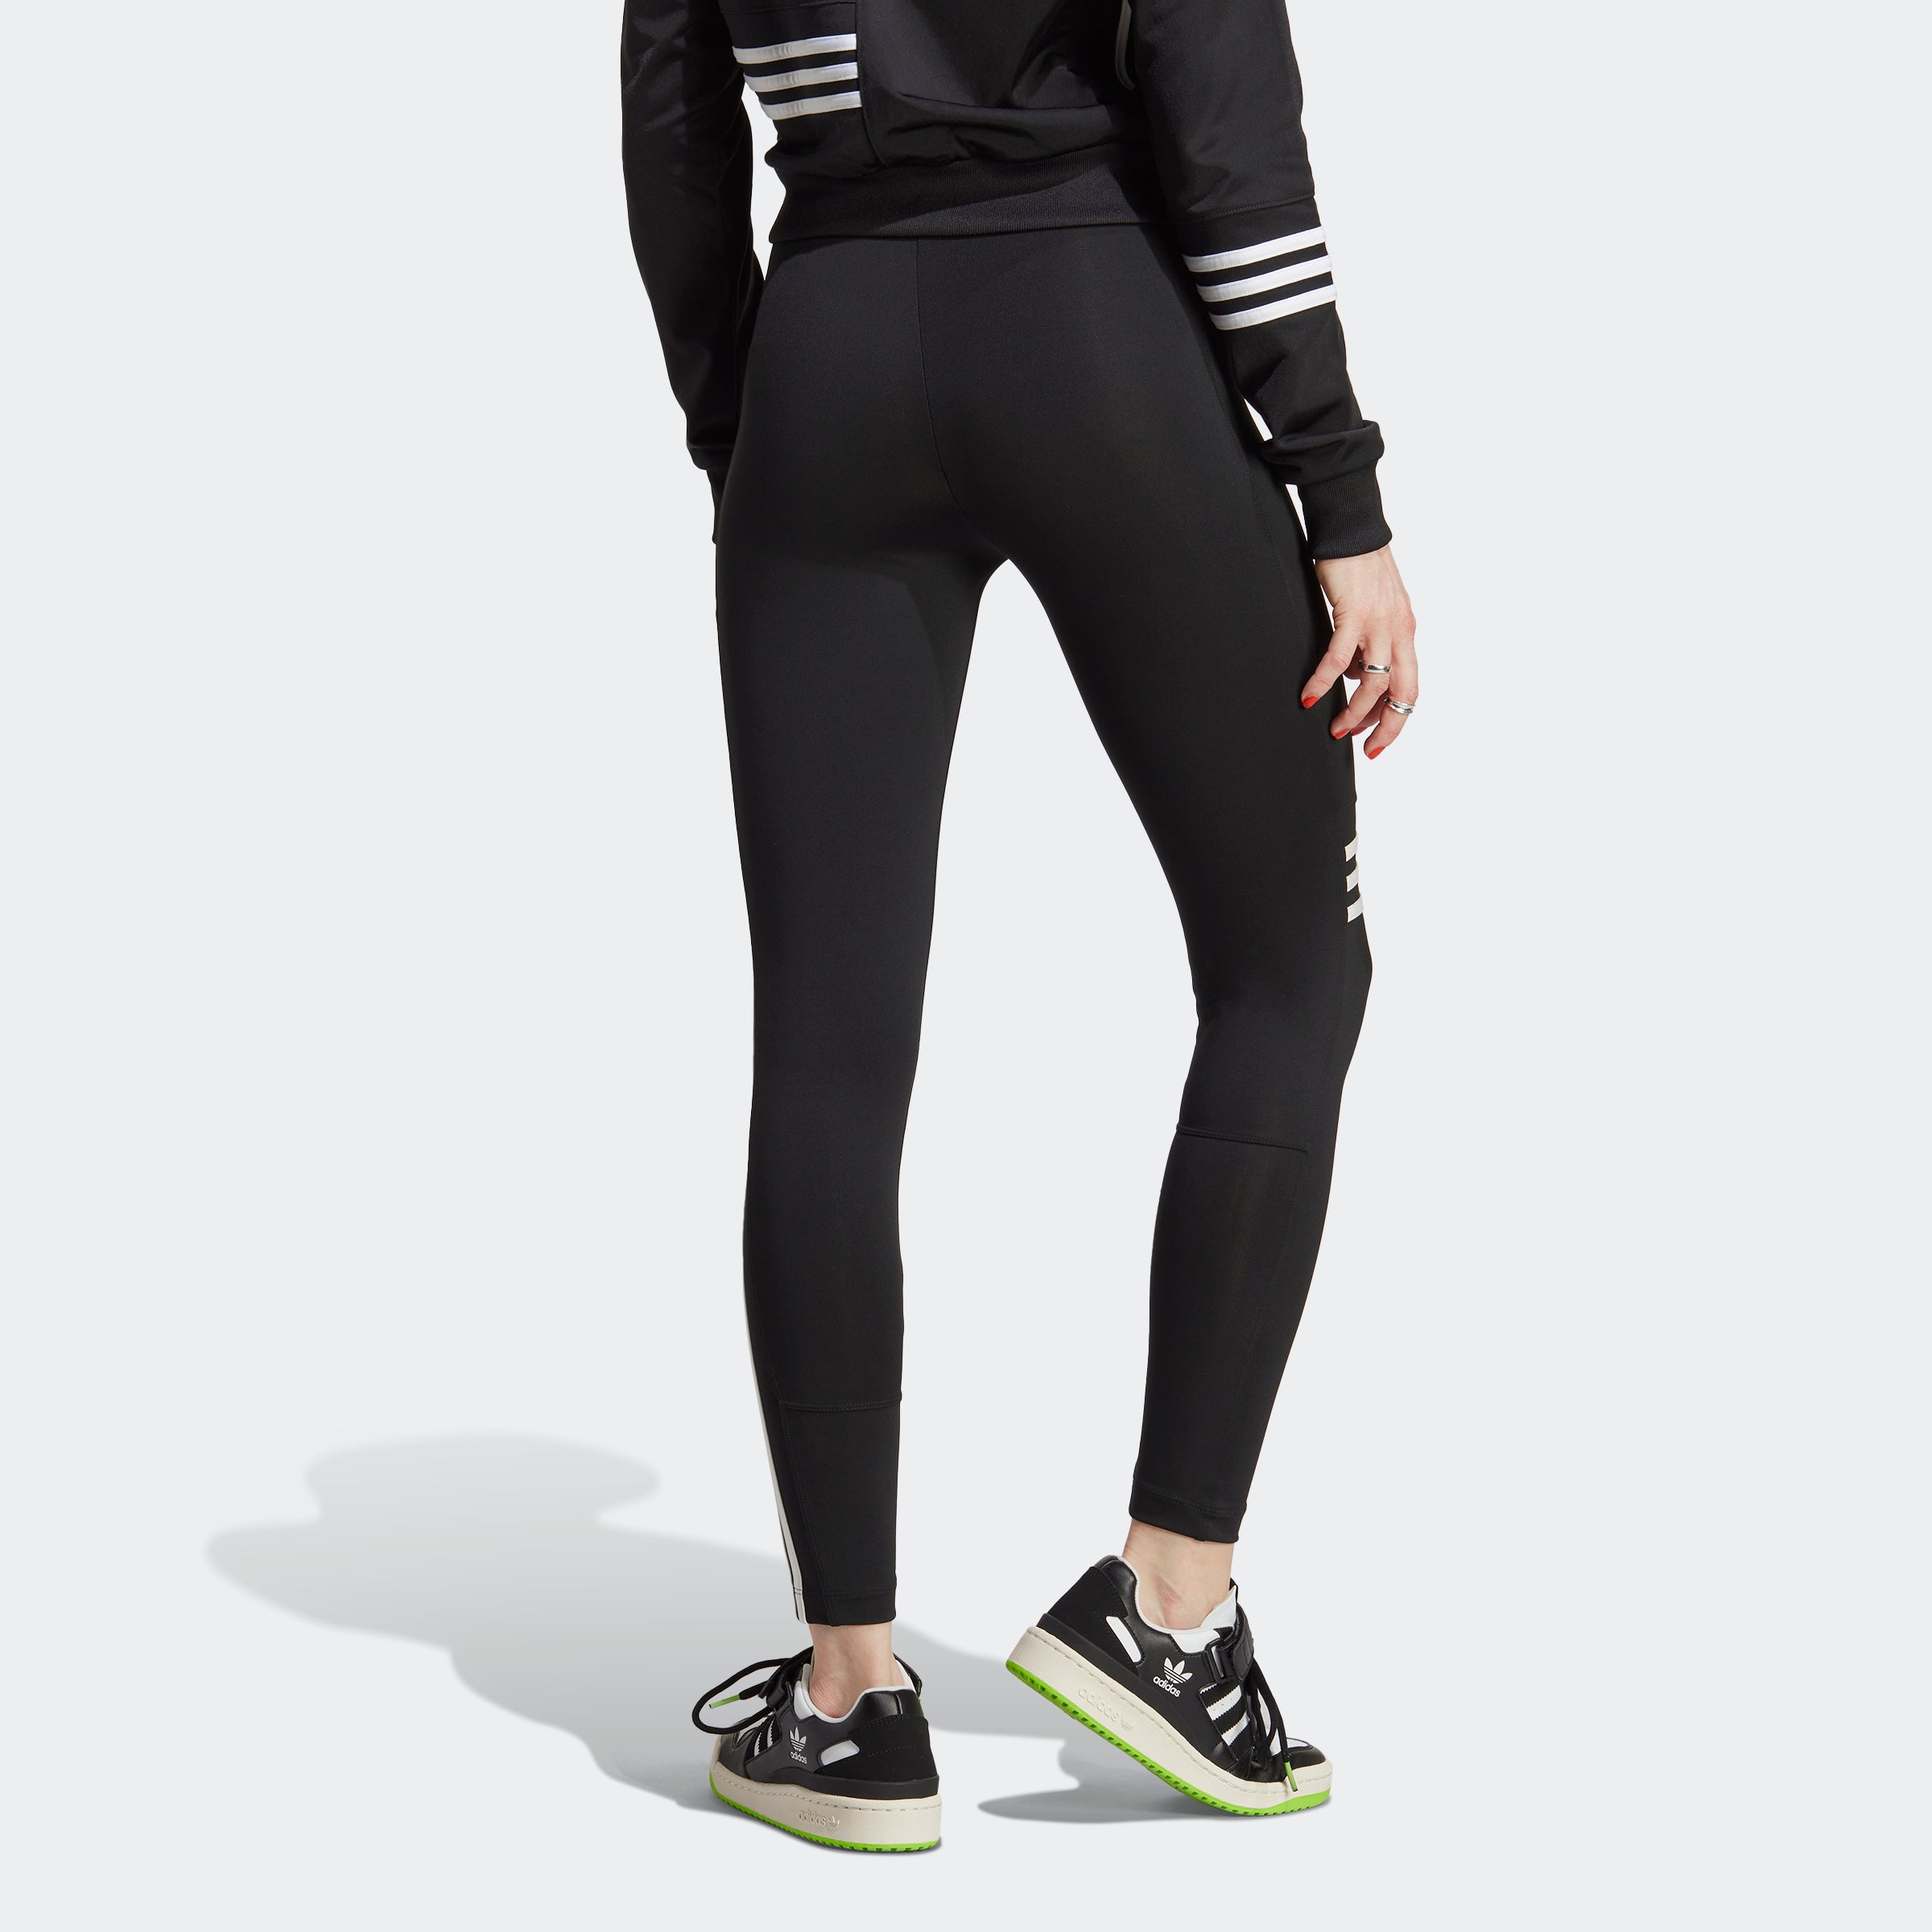 Adidas Women's Black Leggings